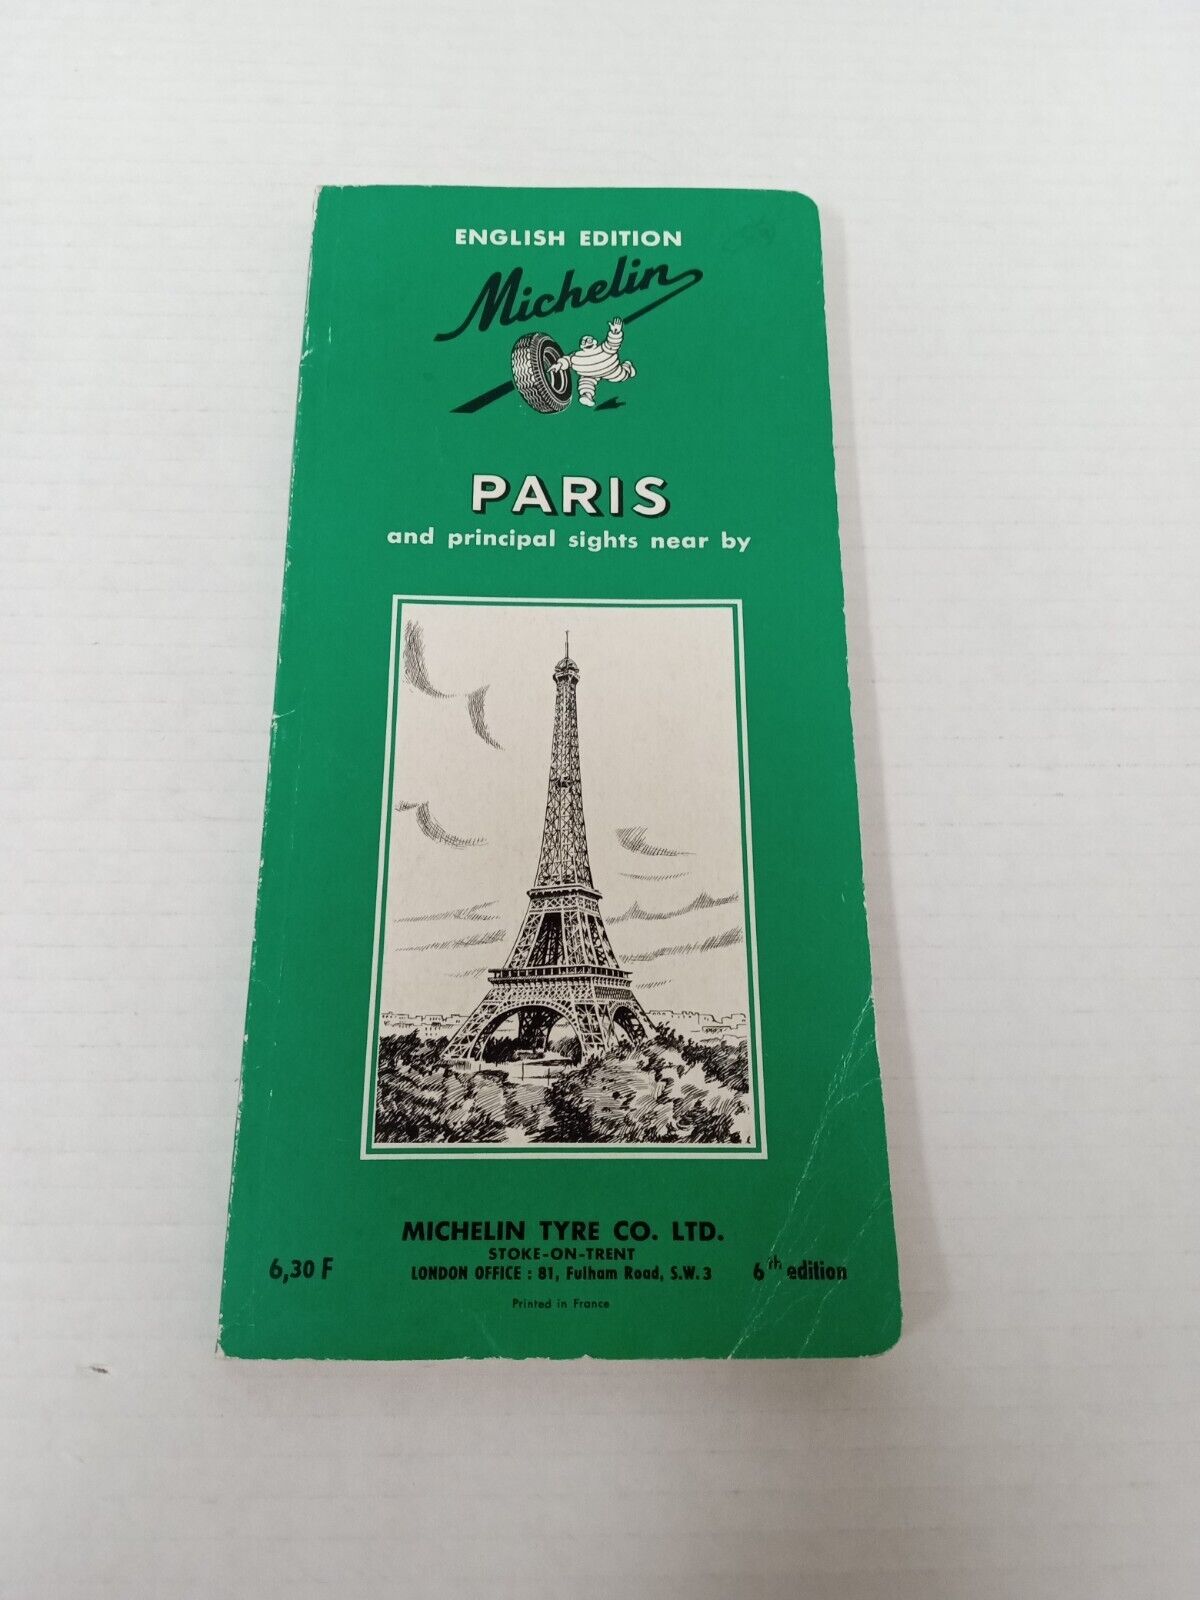 Michelin Travel Guide PARIS France 1964 